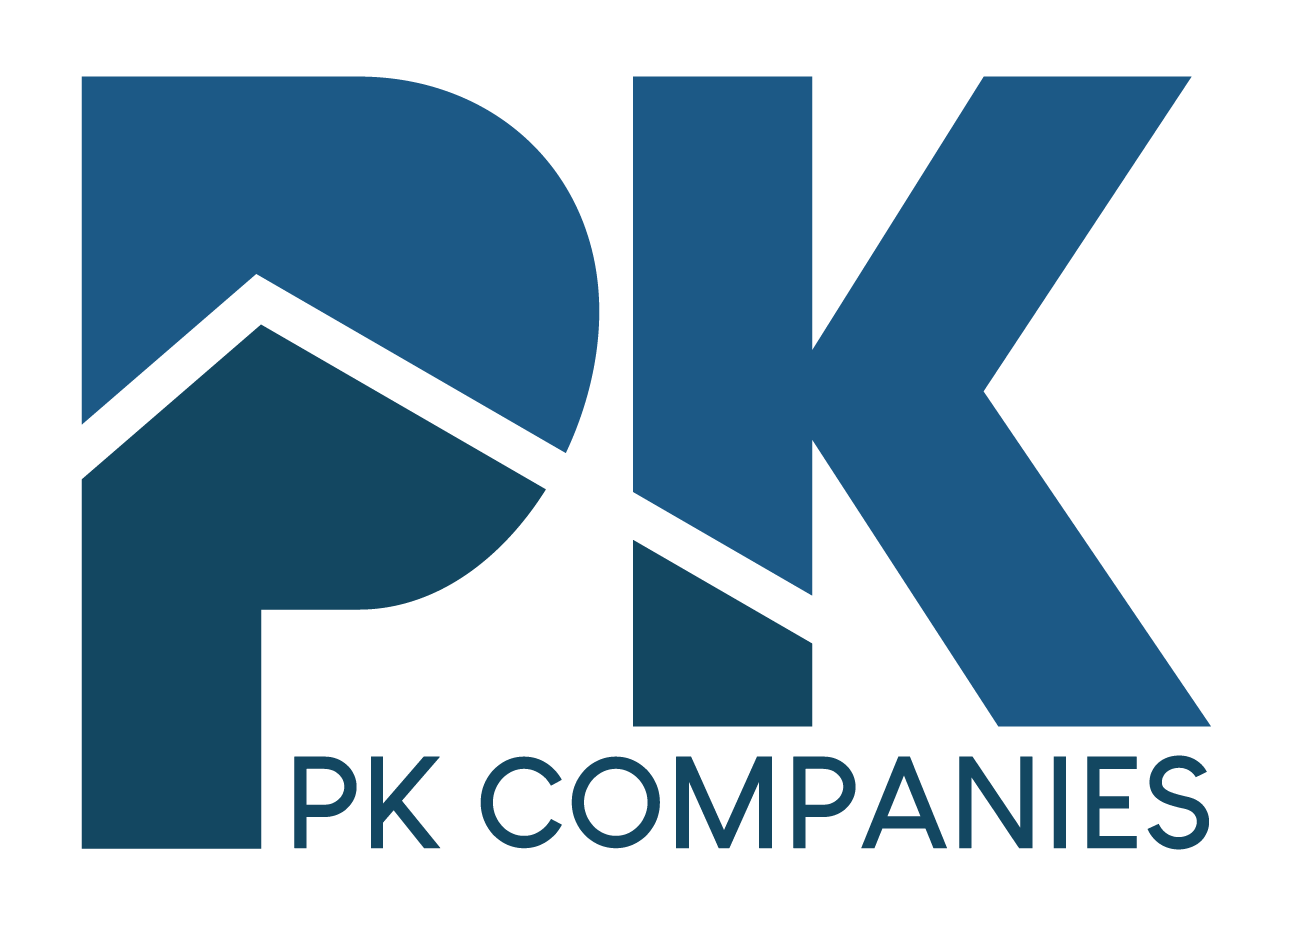 PK COMPANIES